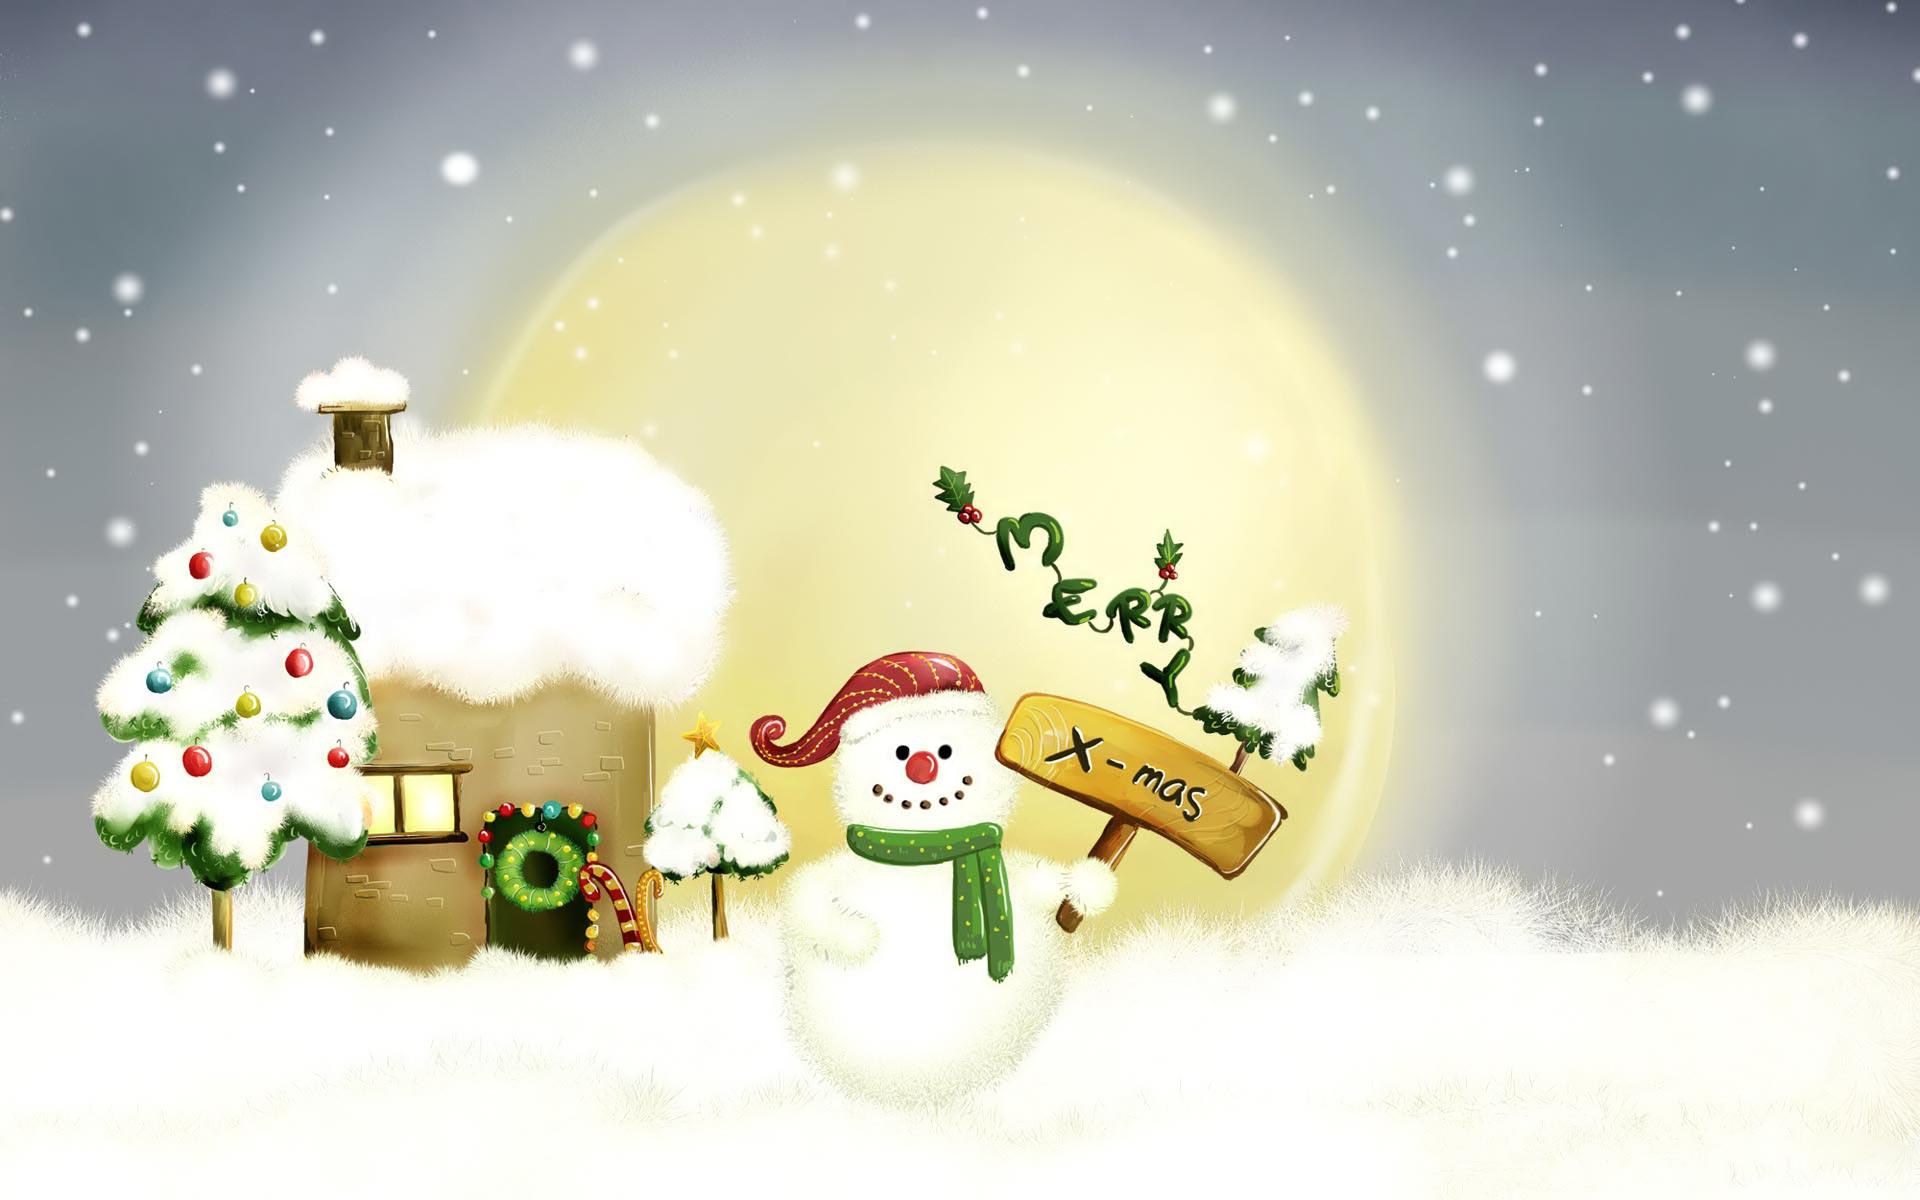 Desktop Wallpaper · Gallery · Miscellaneous · Christmas snowman